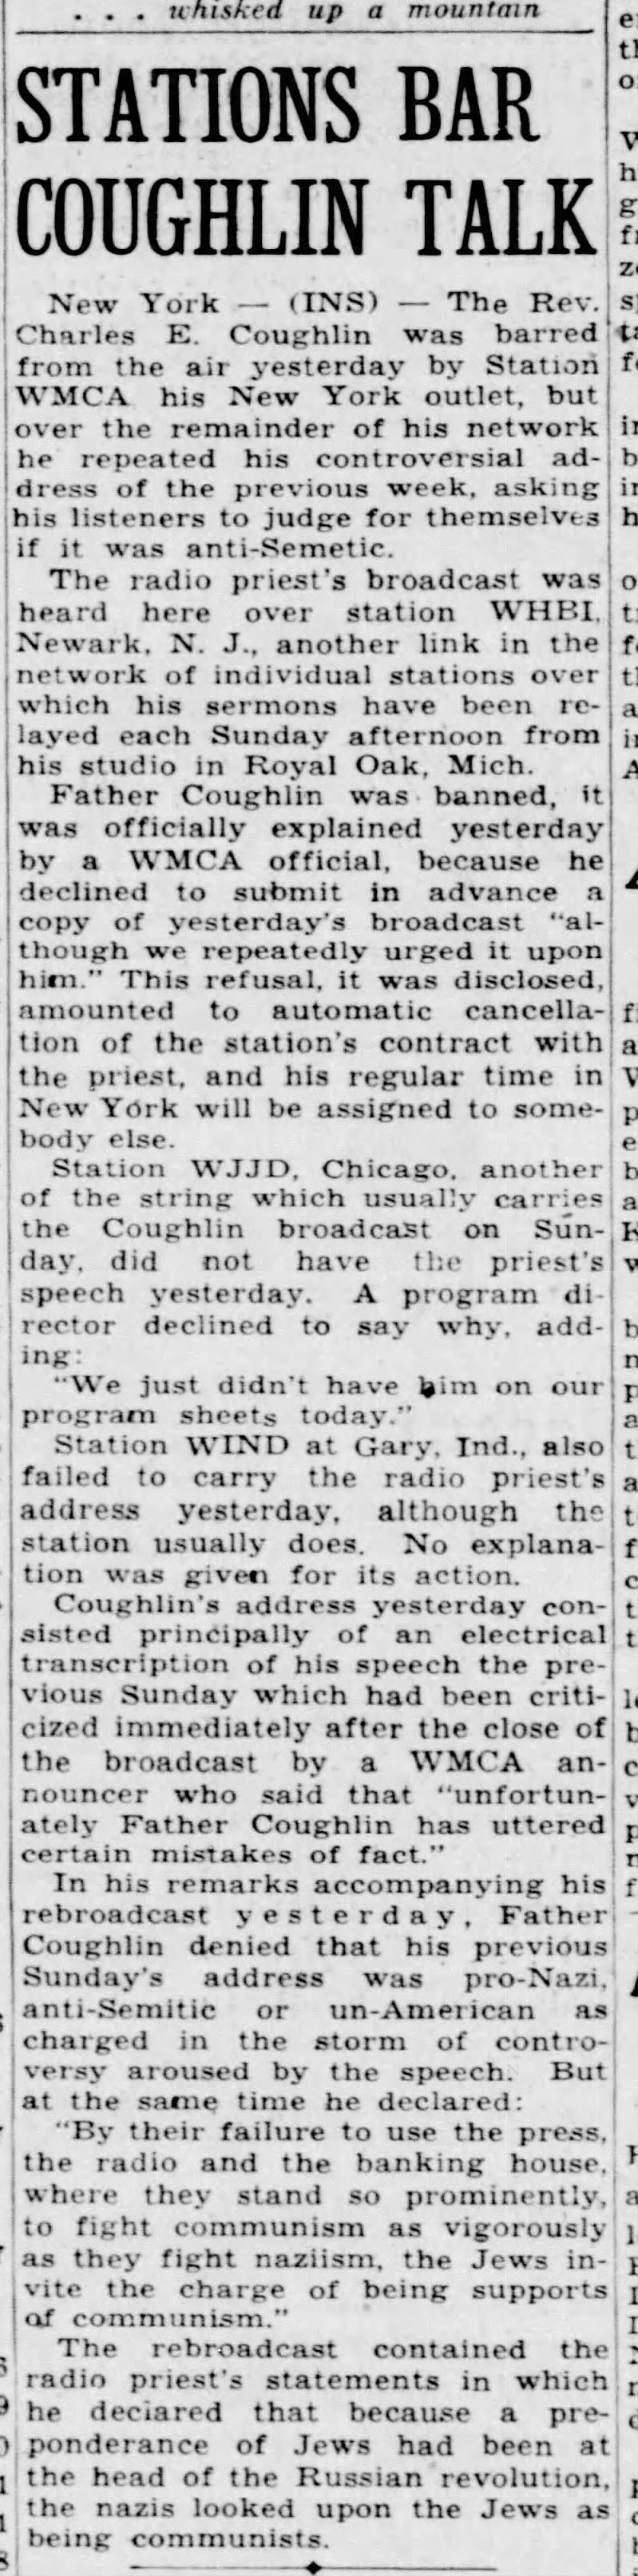 Stations Bar Father Coughlin Talk - Nov 28, 1938